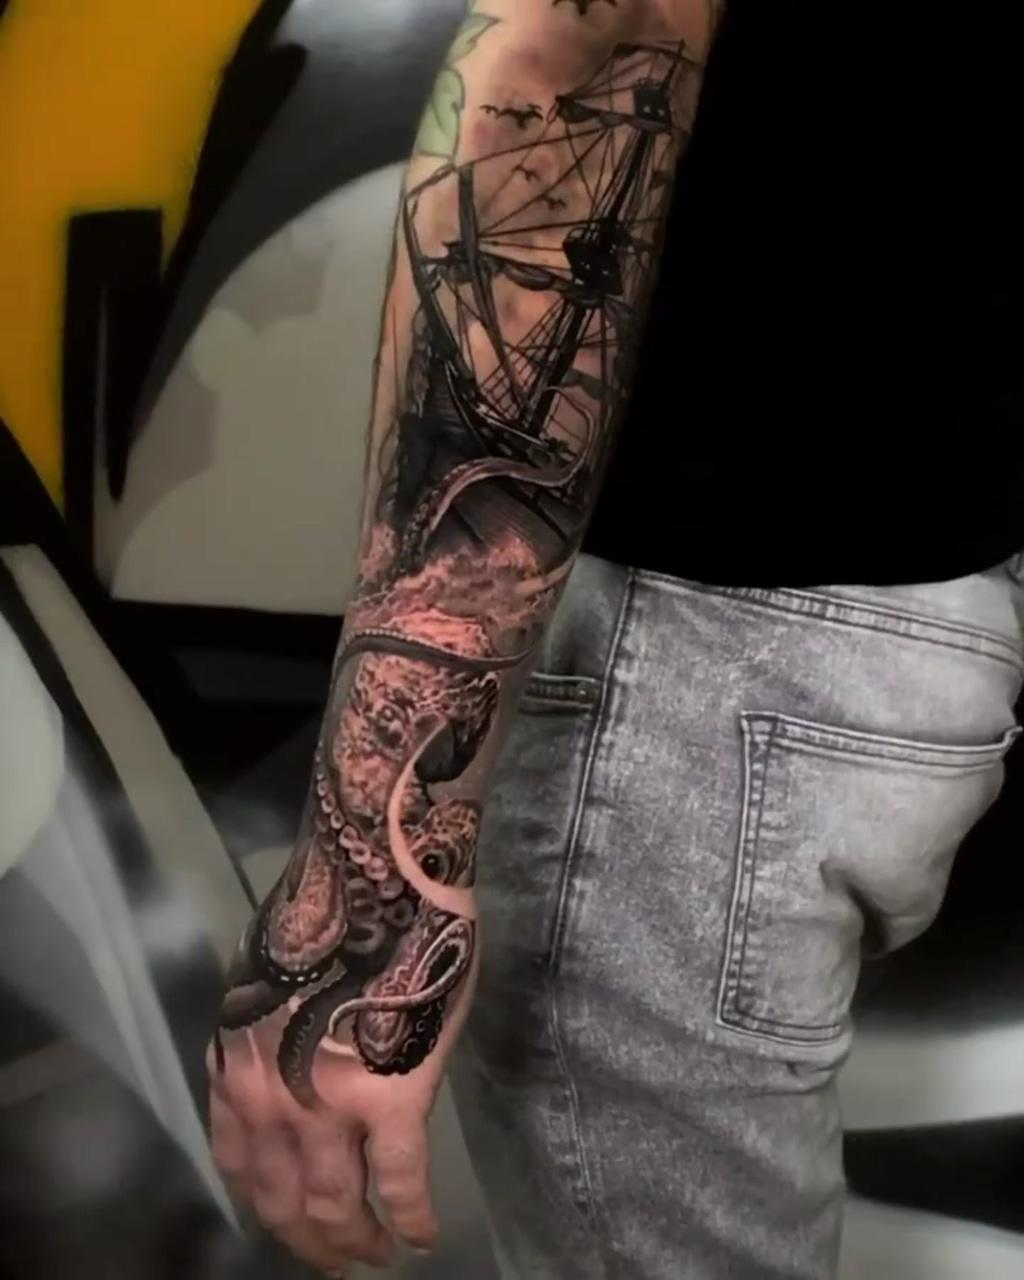 Black and grey tattoo on arm; octopus tattoo sleeve